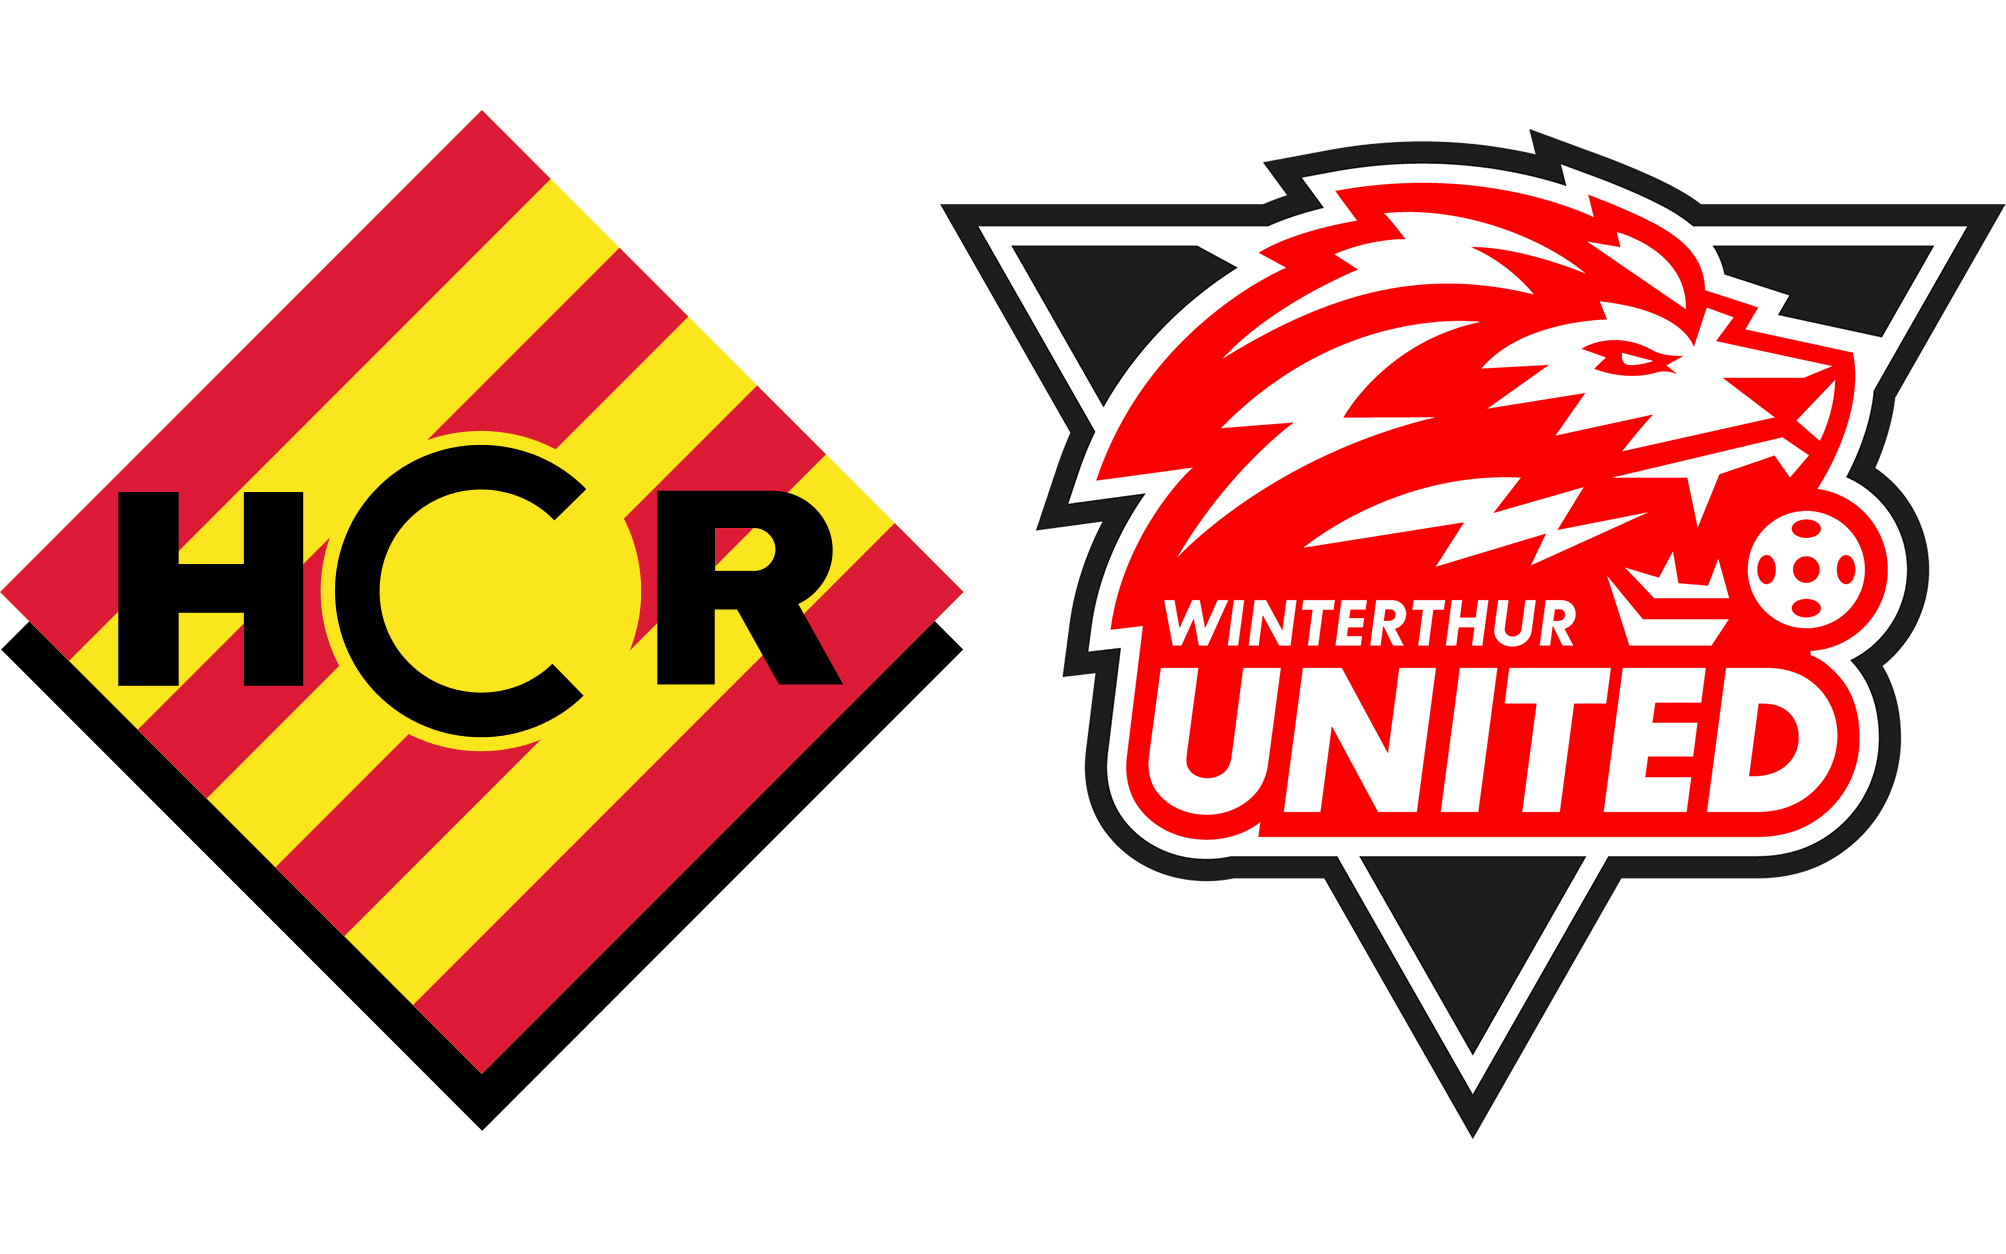 UHC Winterthur United & HC Rychenberg Winterthur